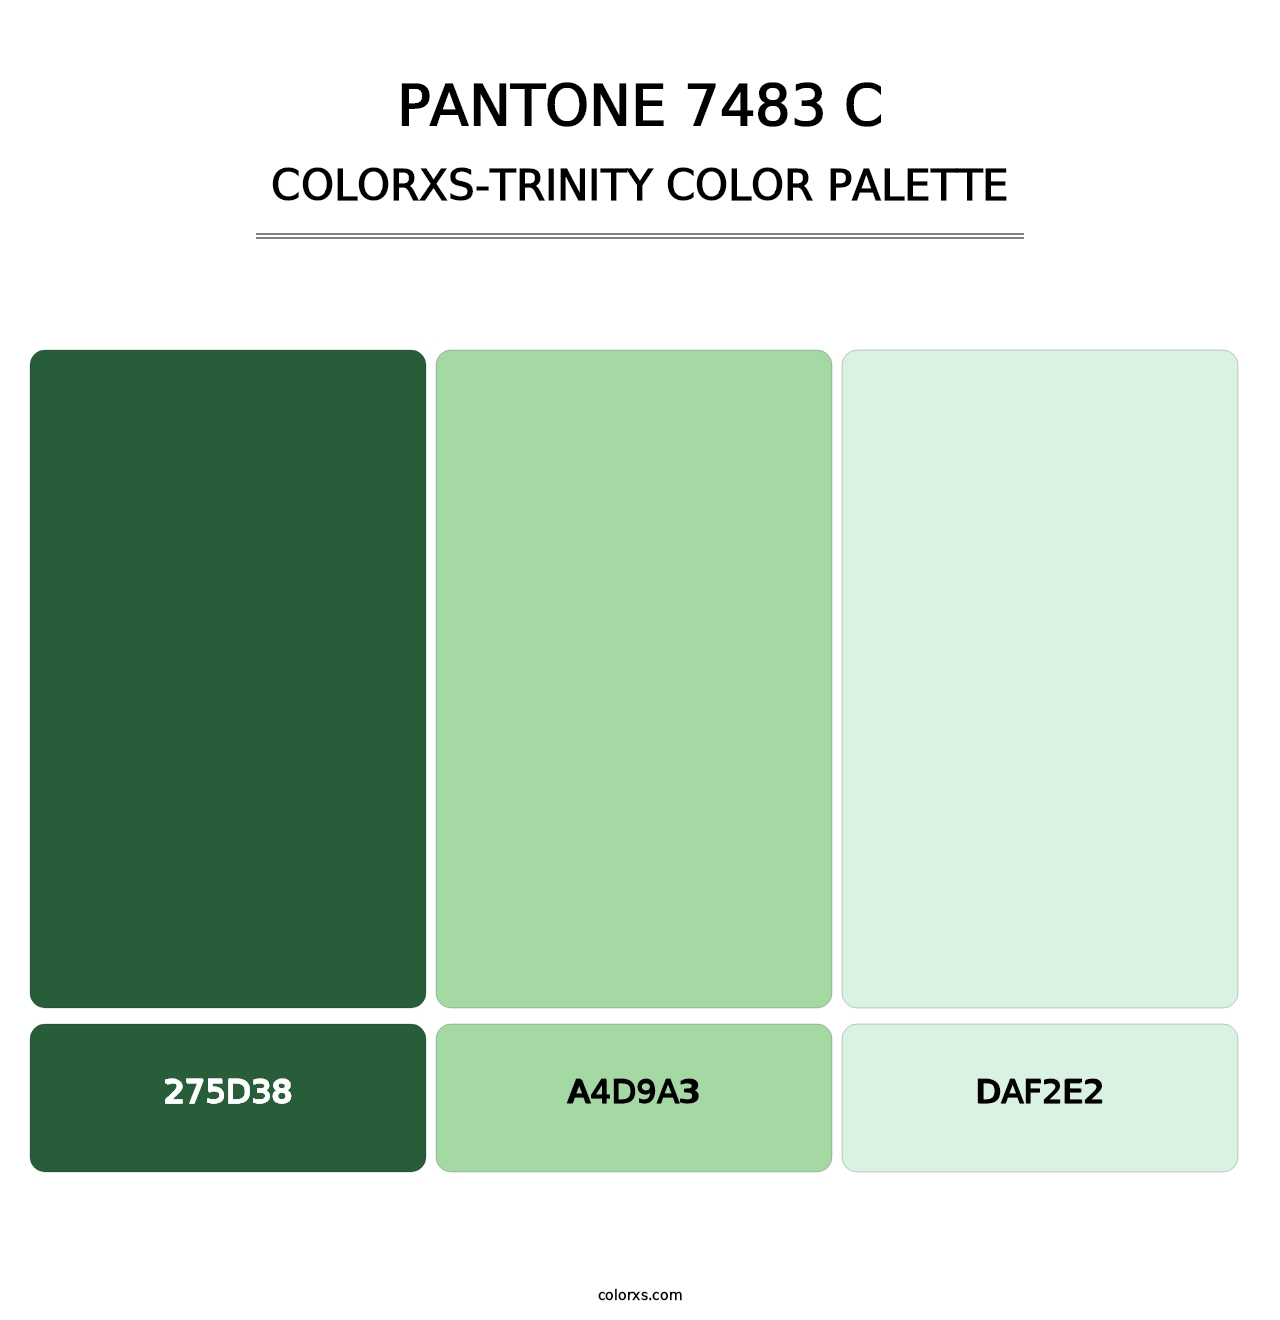 PANTONE 7483 C - Colorxs Trinity Palette